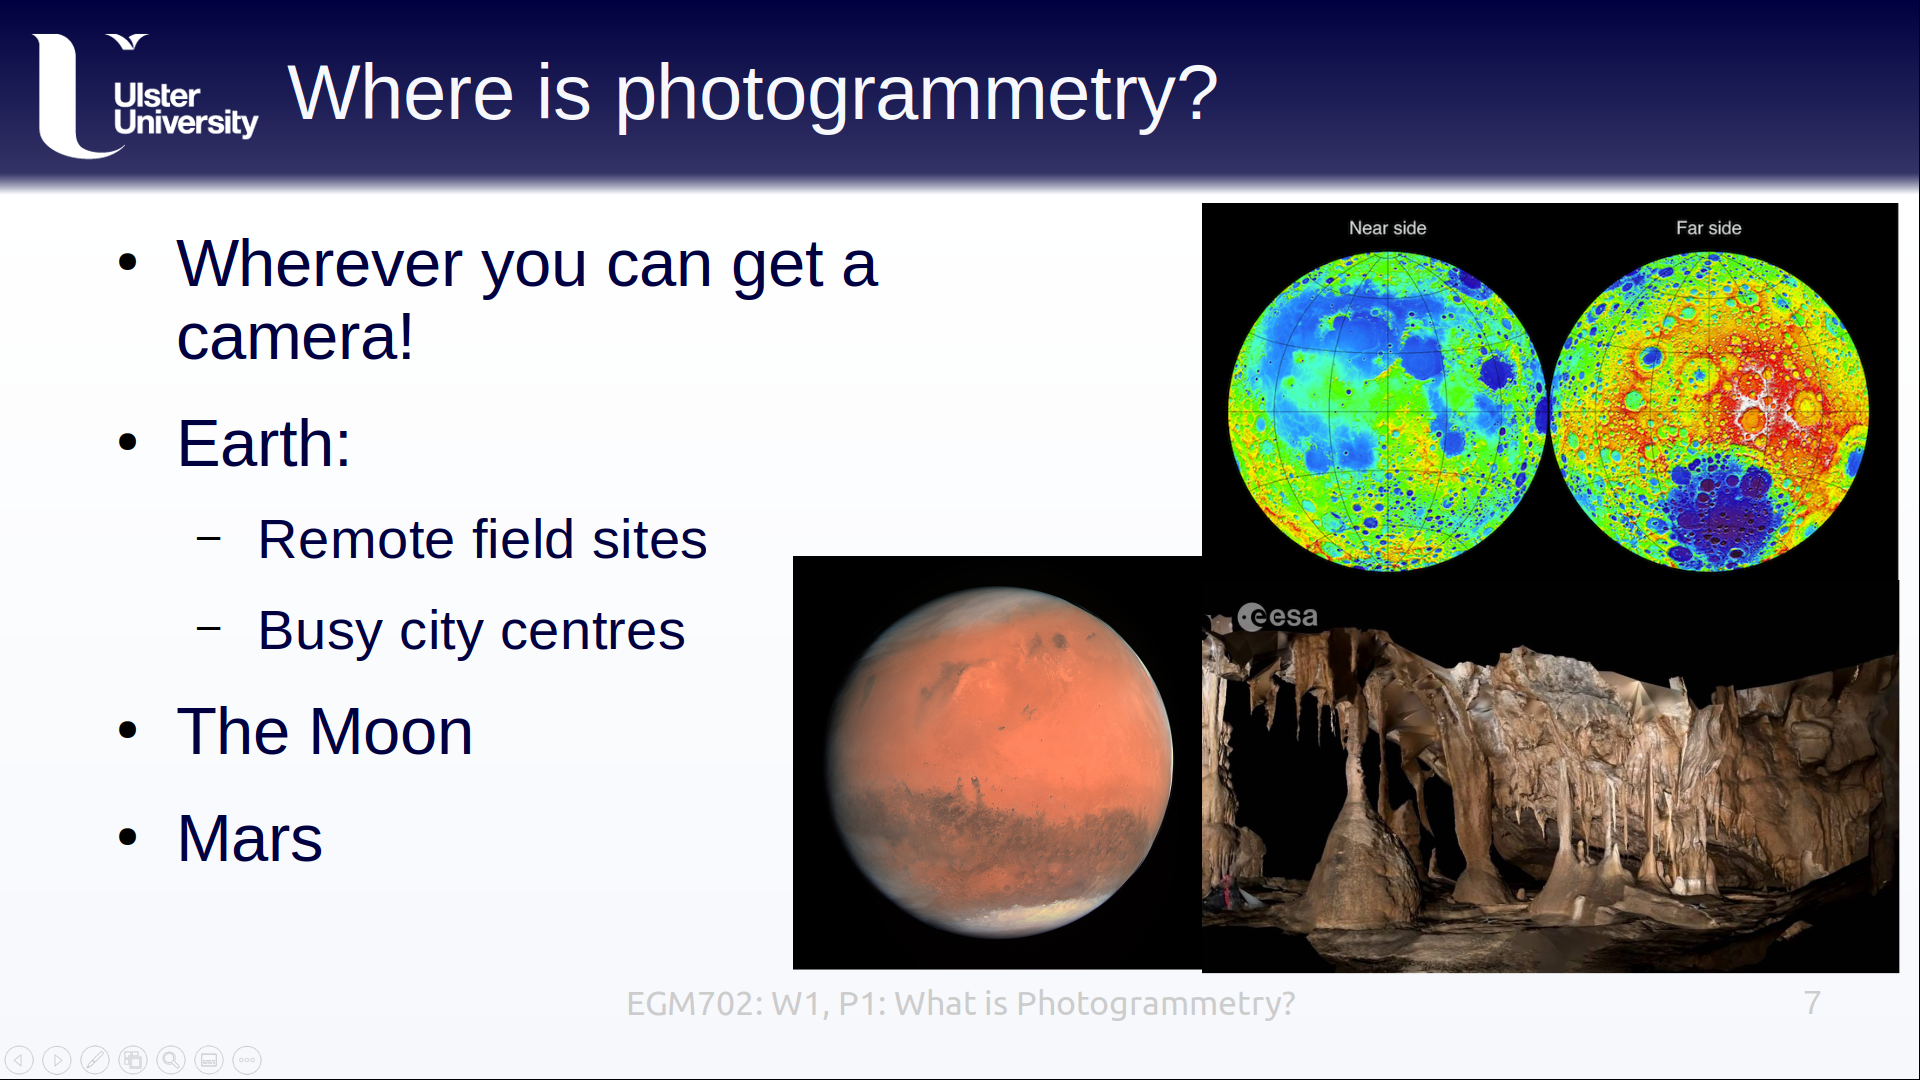 a slide explaining where photogrammetry is applied